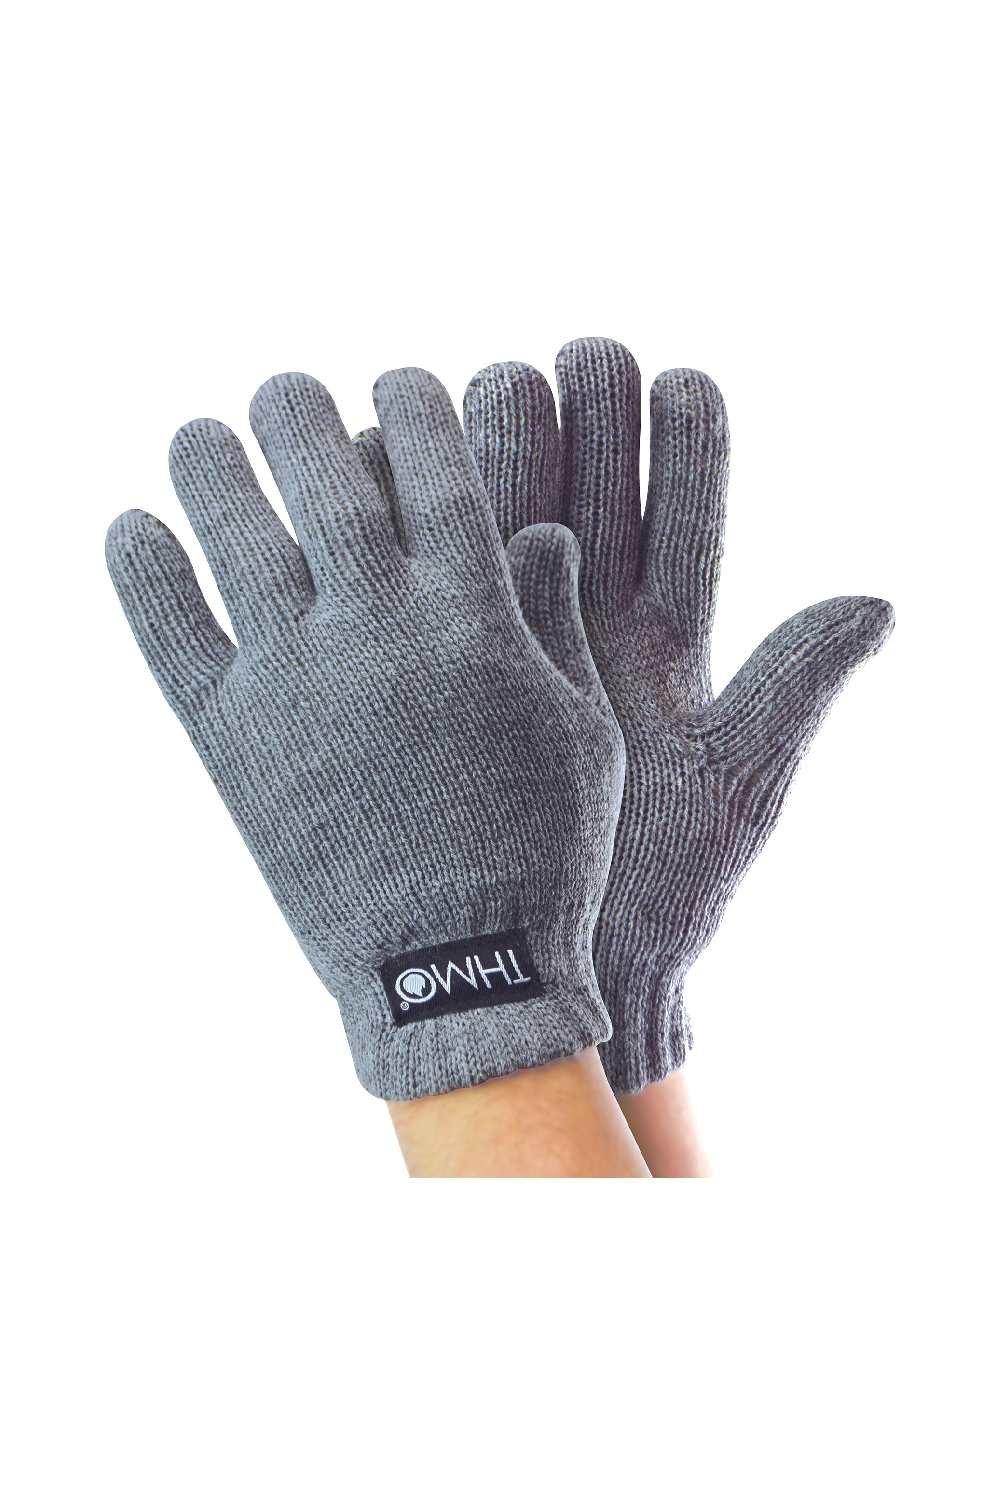 Knitted Thermal Full Finger Thinsulate Gloves for Winter